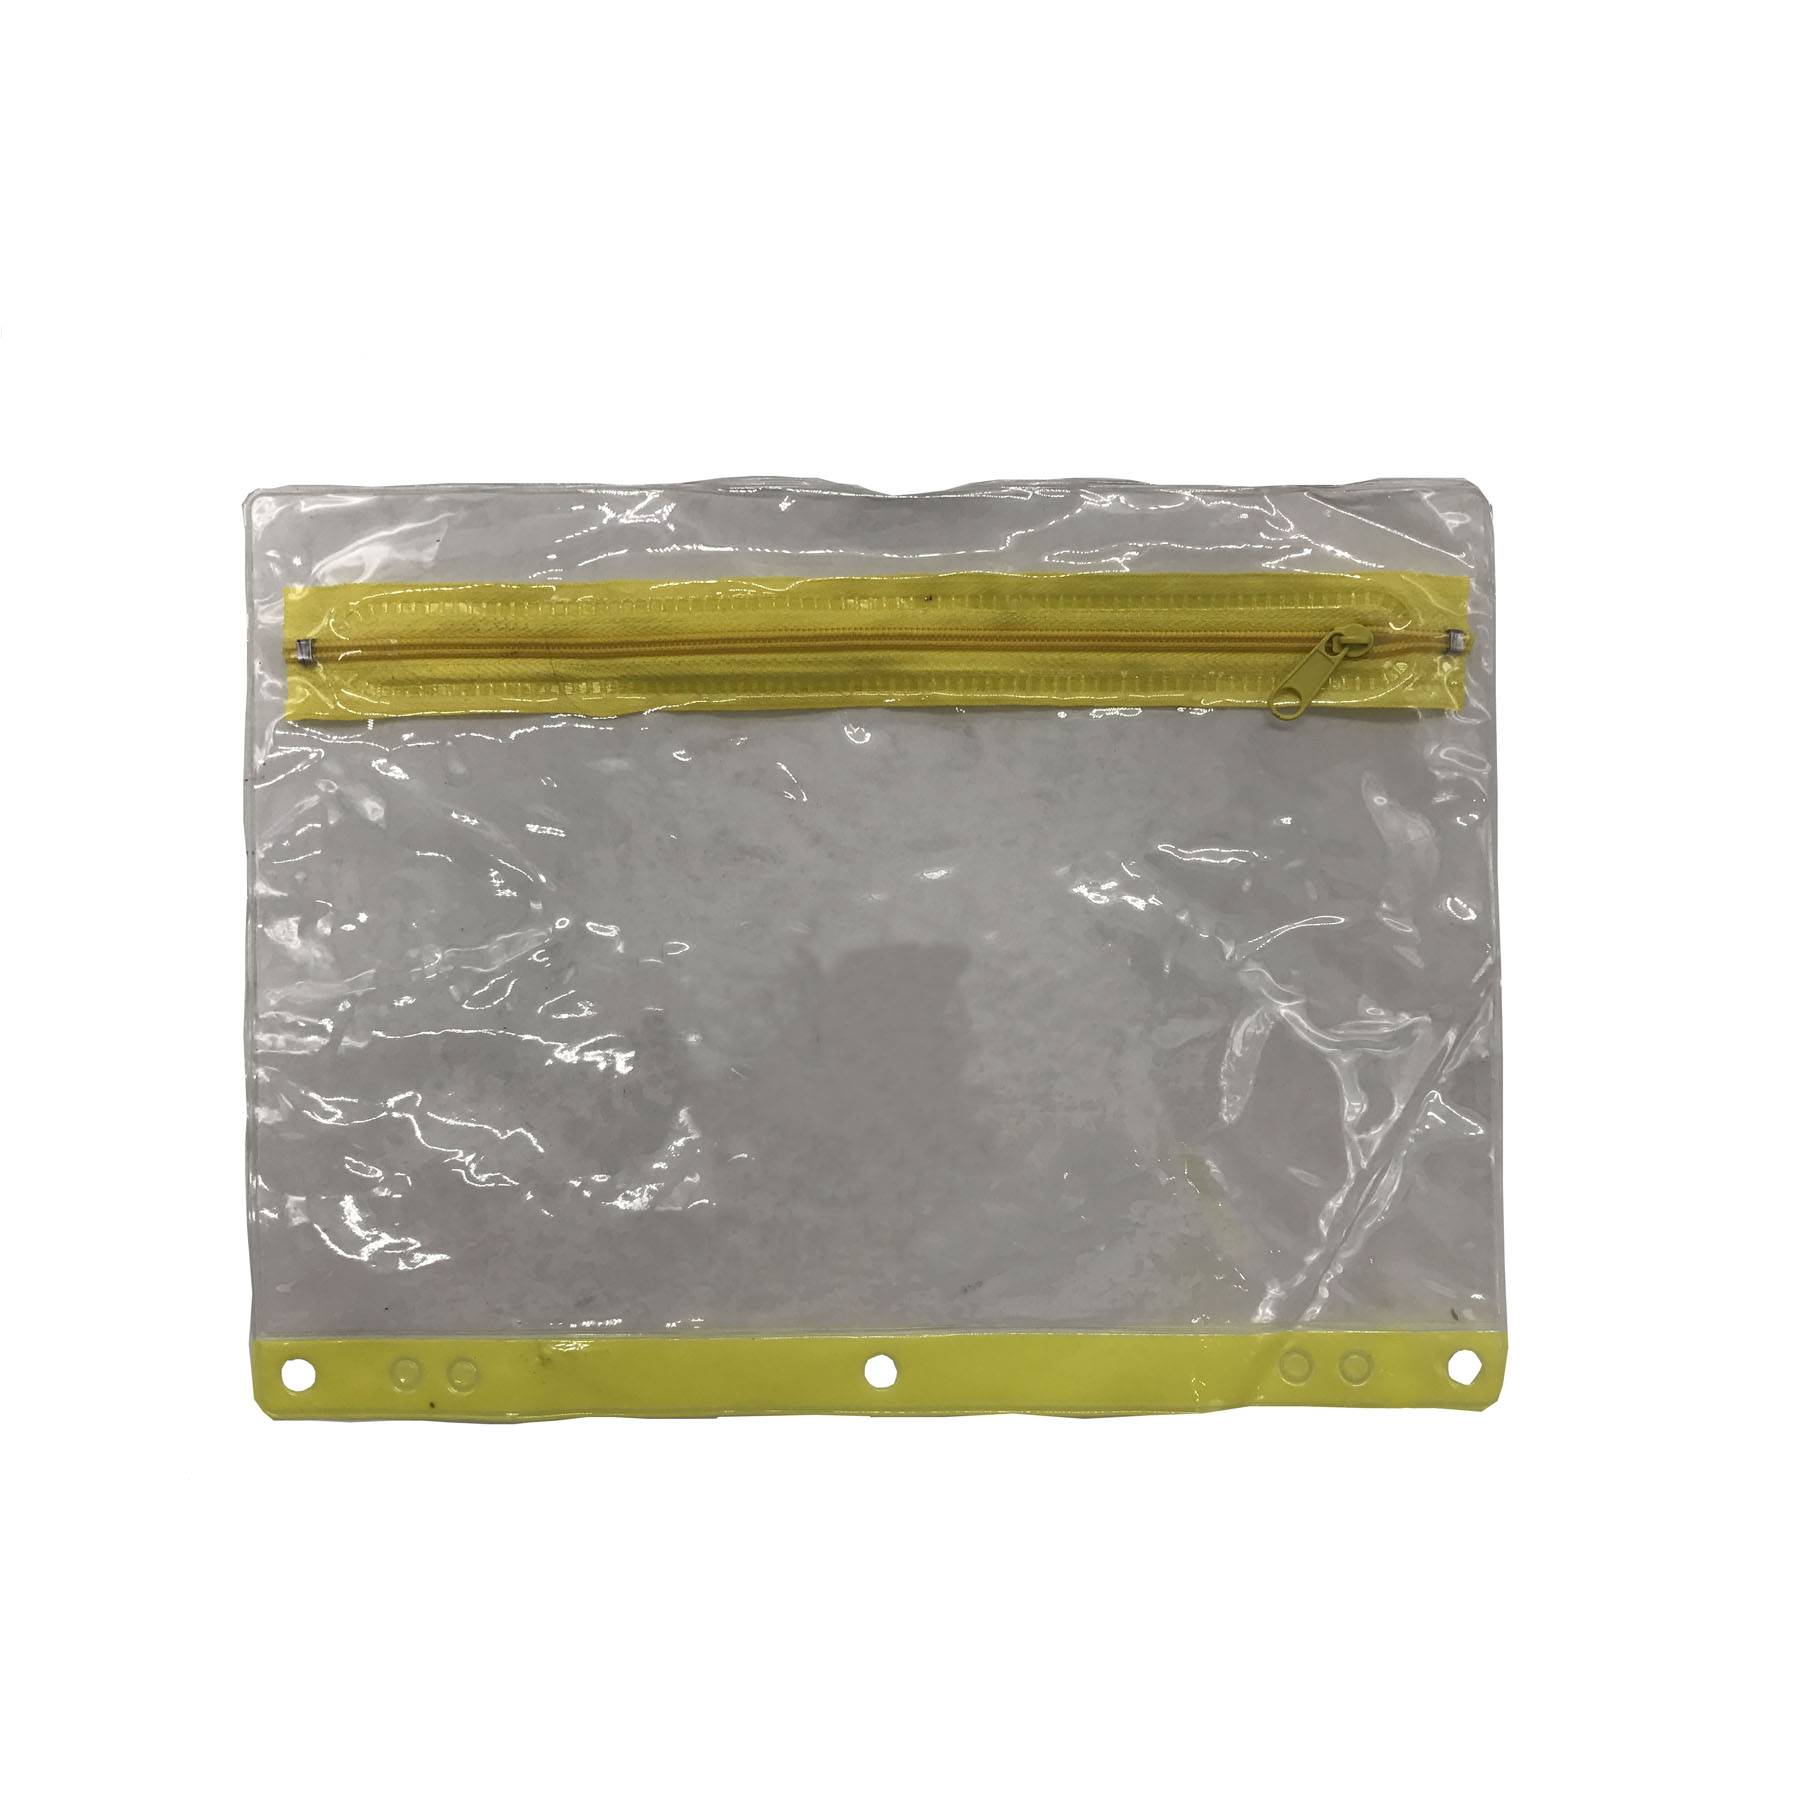 GL-AAT1056 Transparent PVC File Pocket / Documents Pouch with Zipper